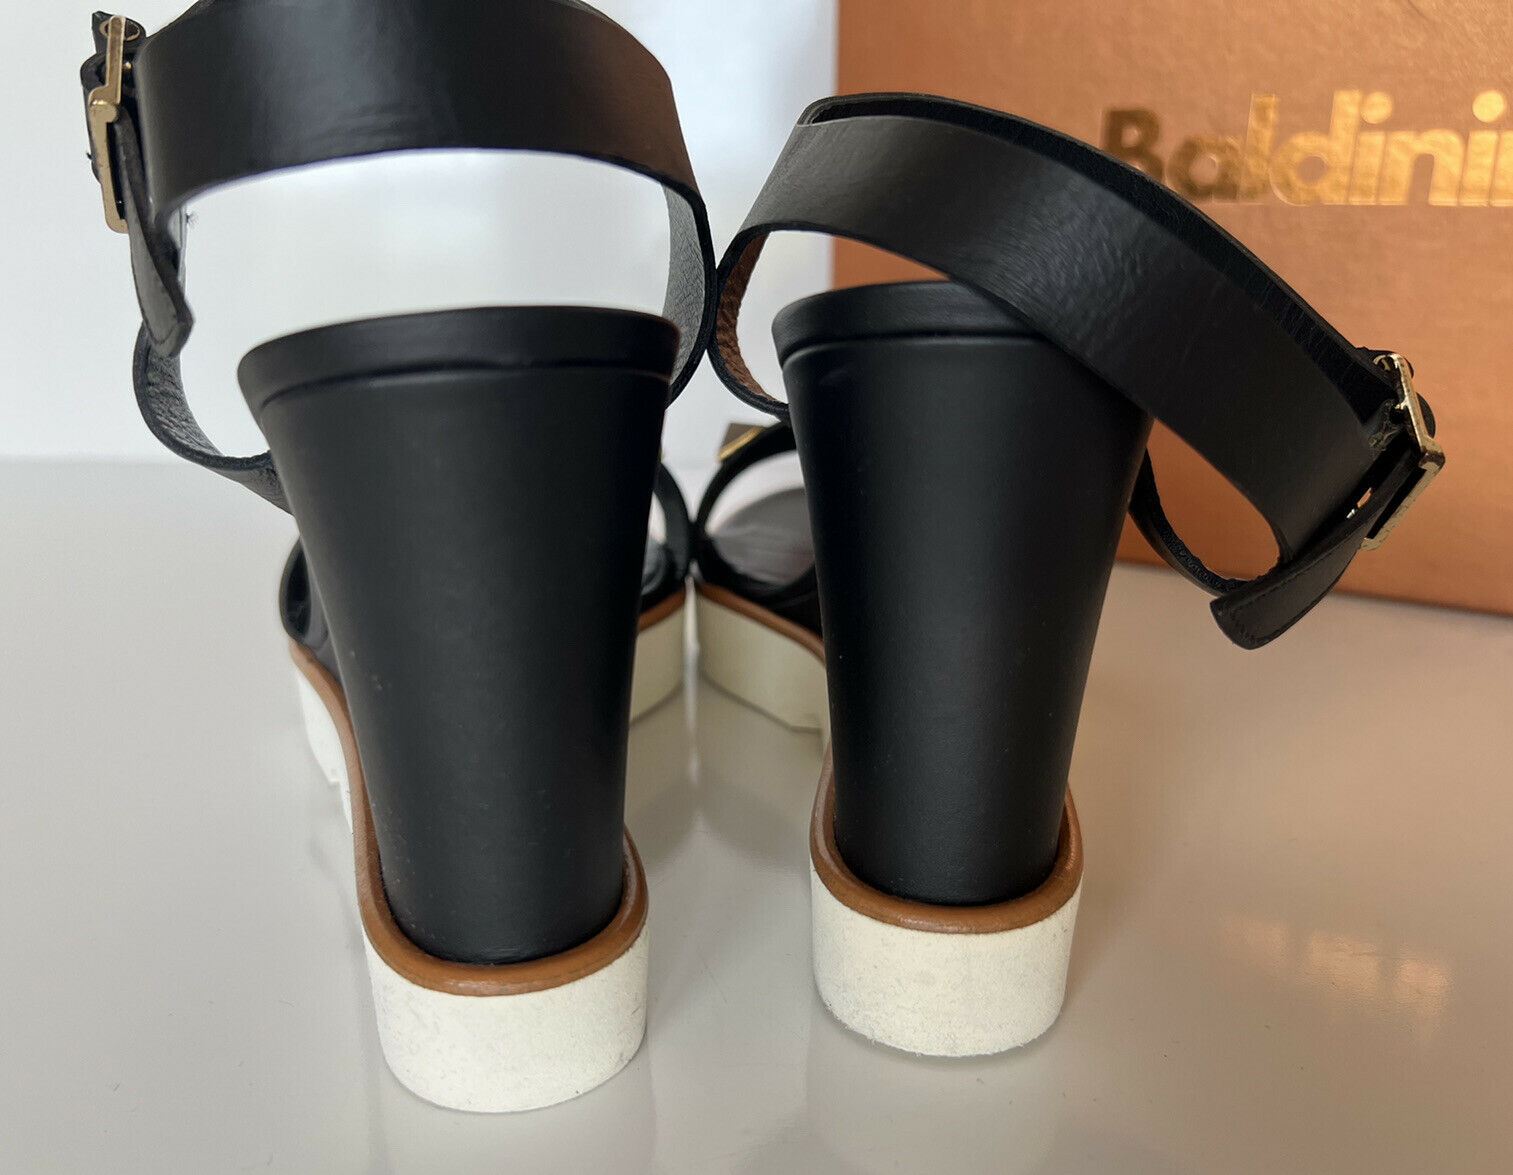 NIB $639 Baldinini Women's Wedges Sandals Black 8.5 US (39 Eu) Italy 753070